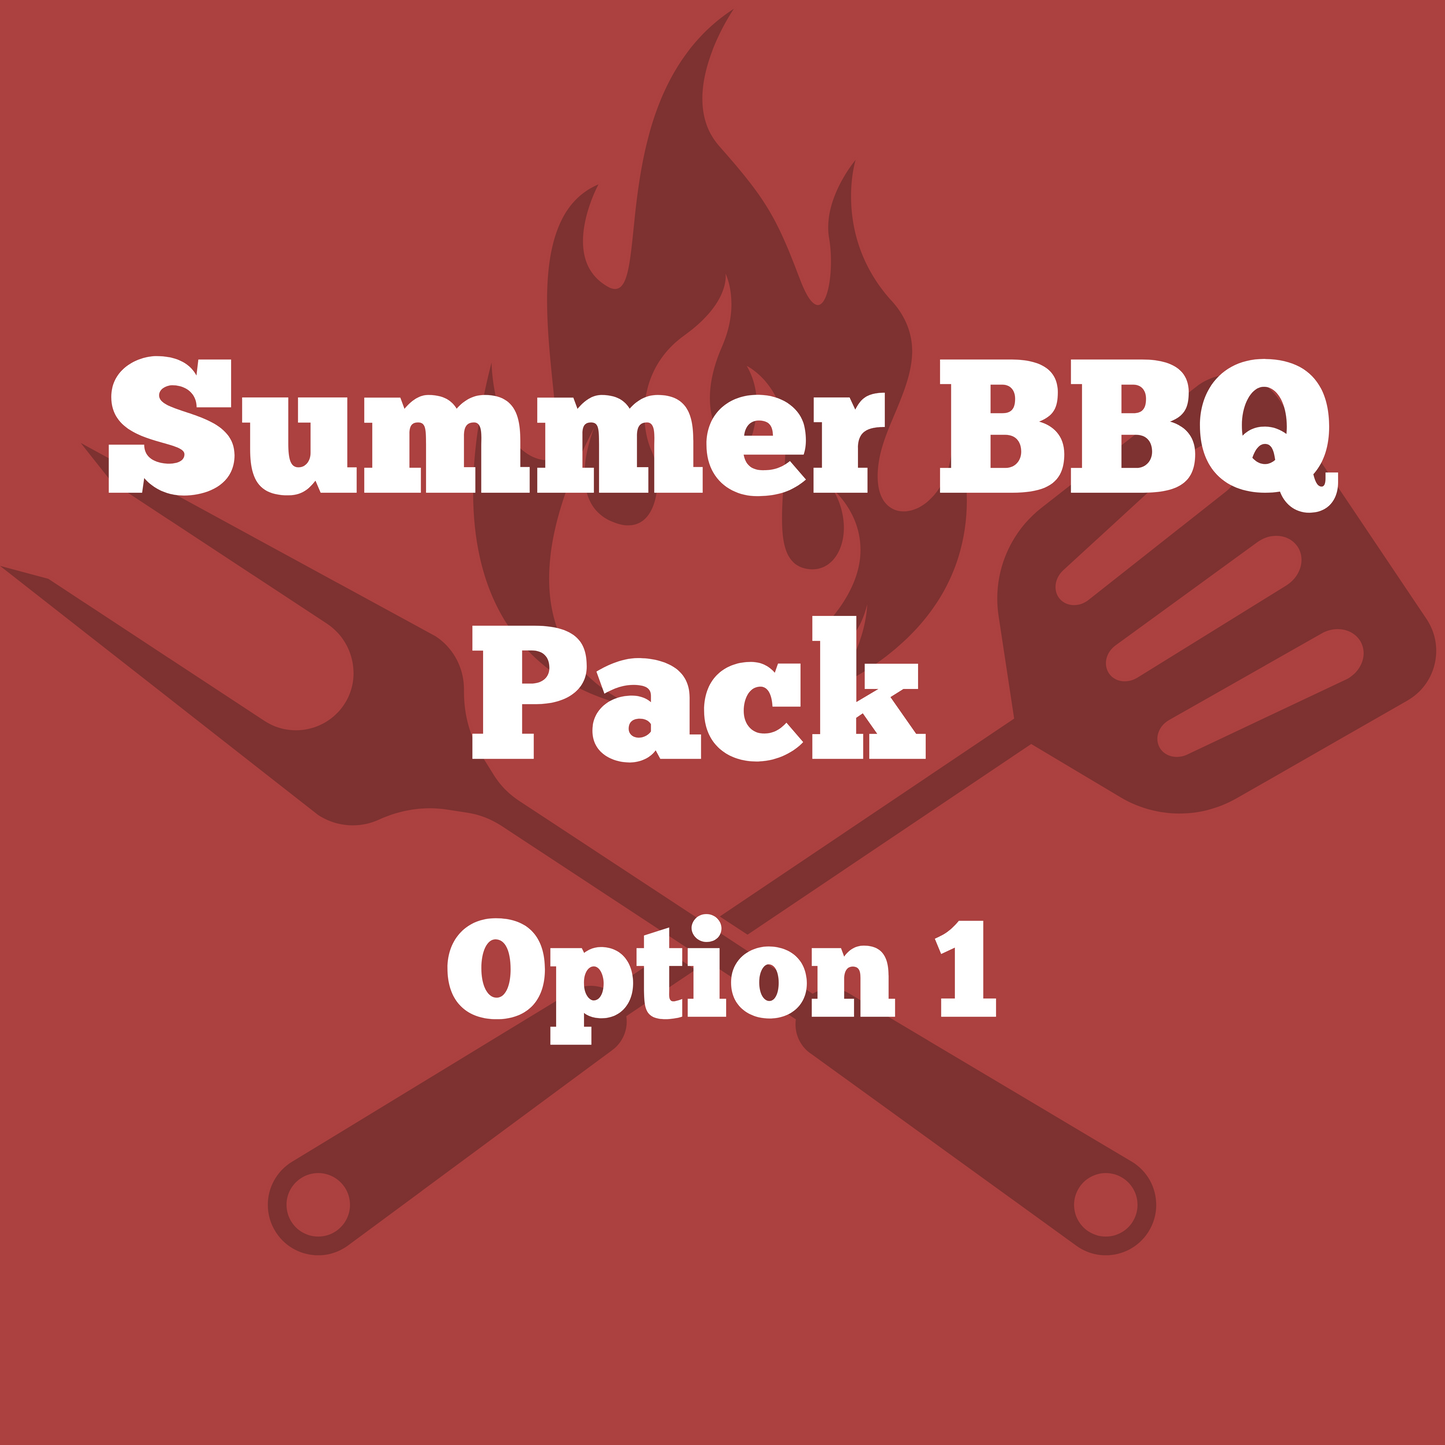 Summer BBQ Pack Option 1